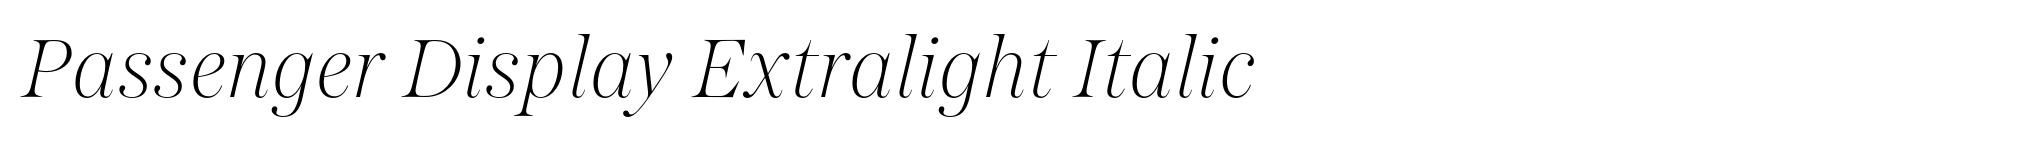 Passenger Display Extralight Italic image